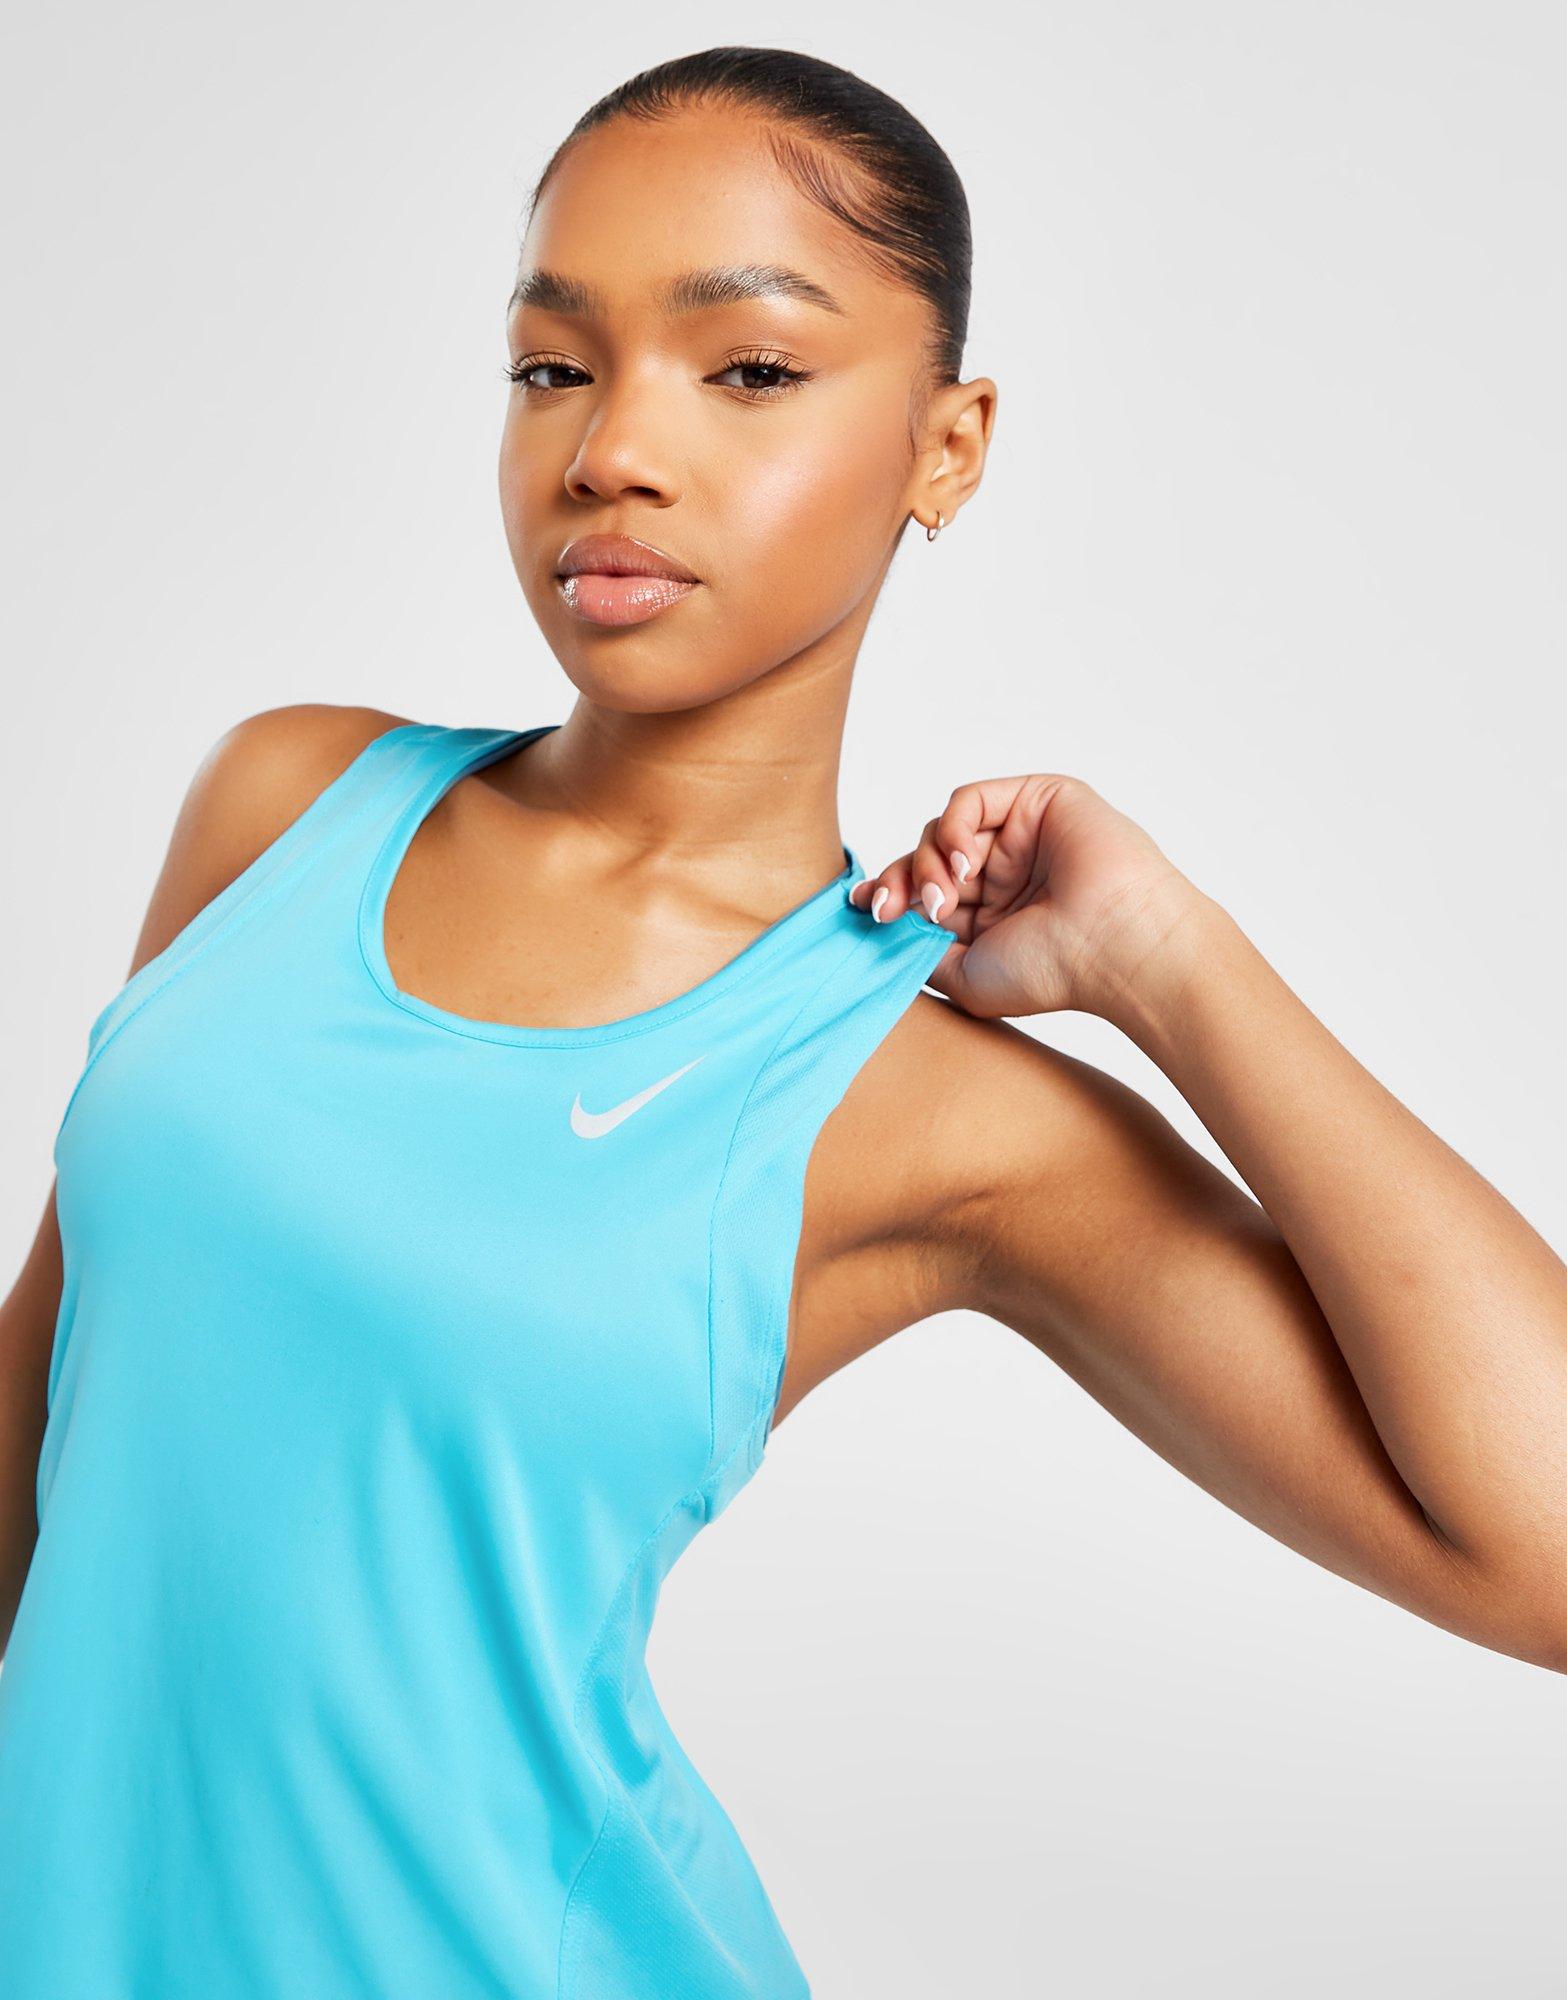 Women's Tank Tops & Sleeveless Tops. Nike IL